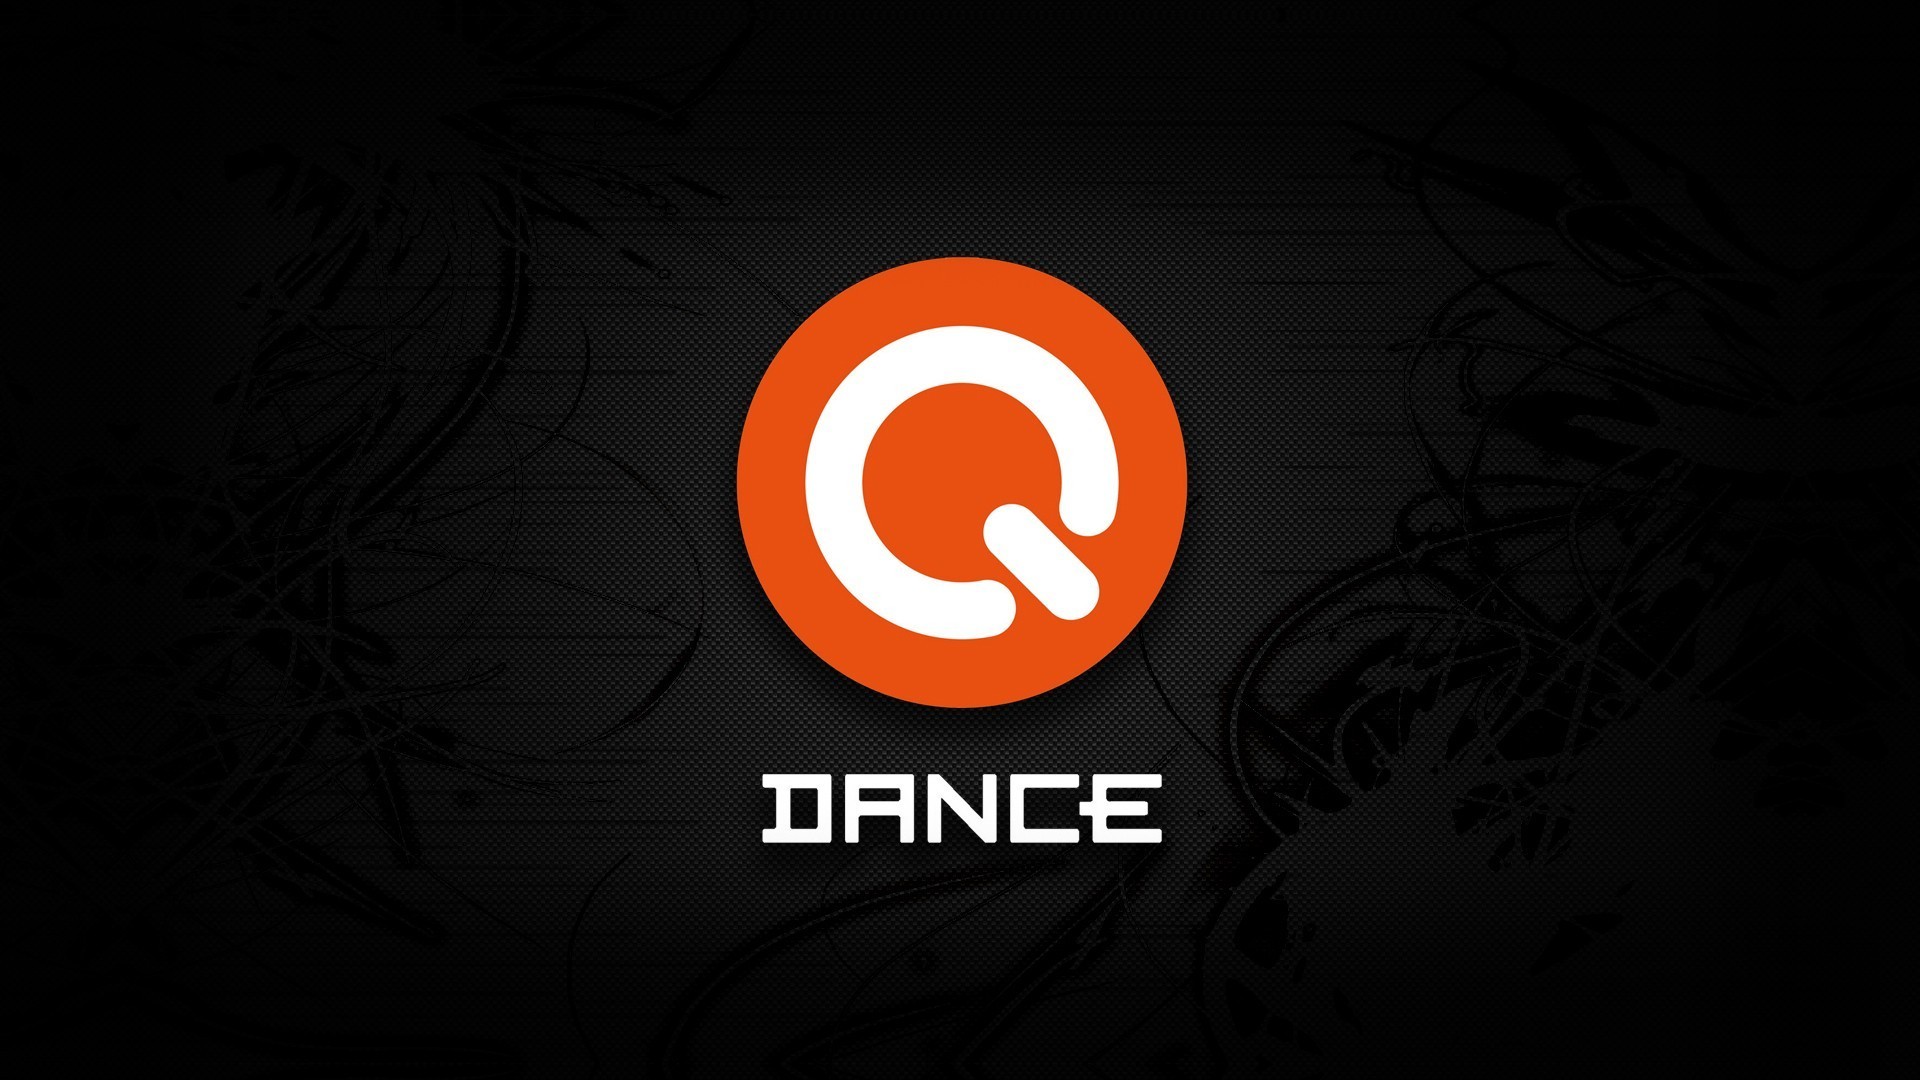 Q Dance Simple Background Black Background 1920x1080